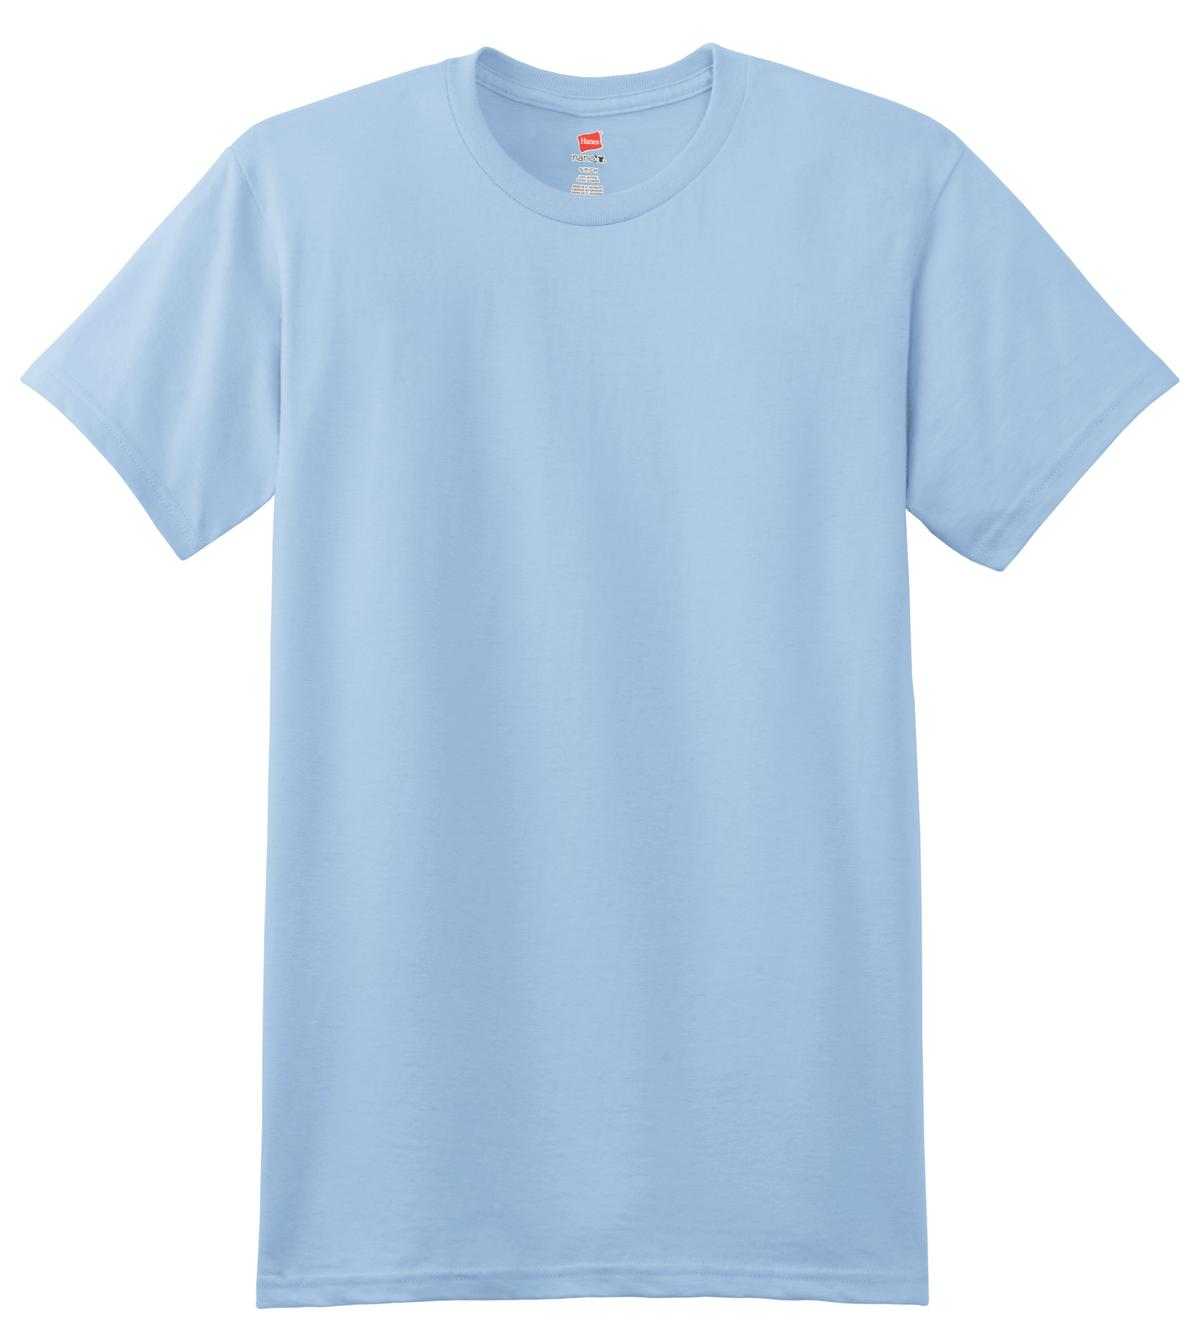 Hanes 4980: Nano-T Cotton T-Shirt. 